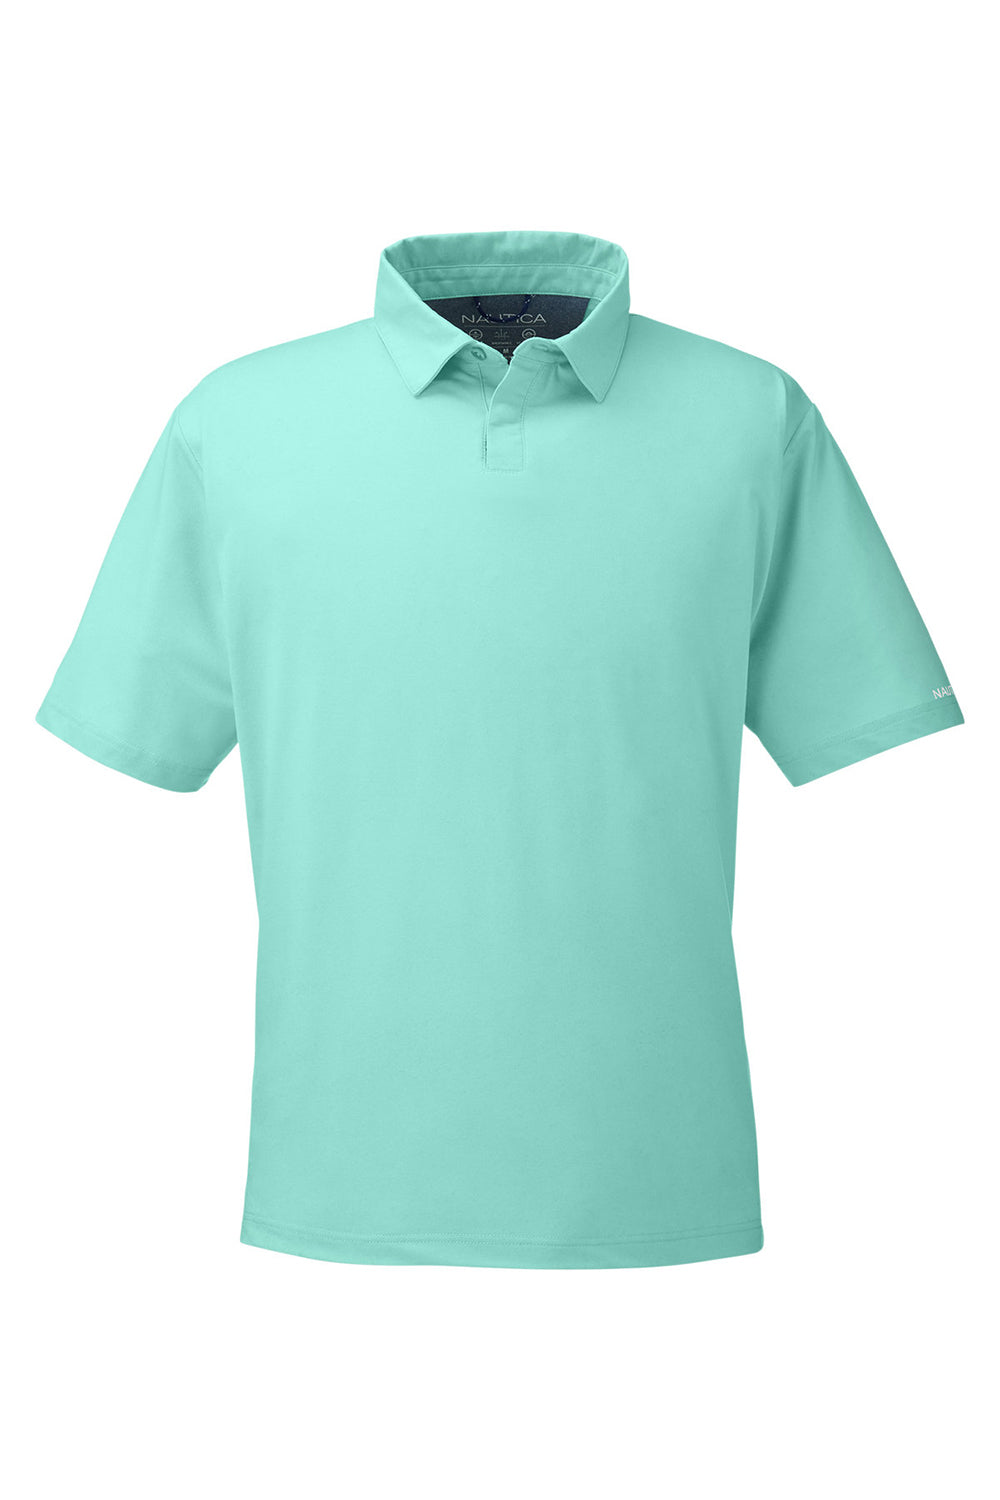 Nautica N17922 Mens Saltwater Short Sleeve Polo Shirt Cool Mint Green Flat Front